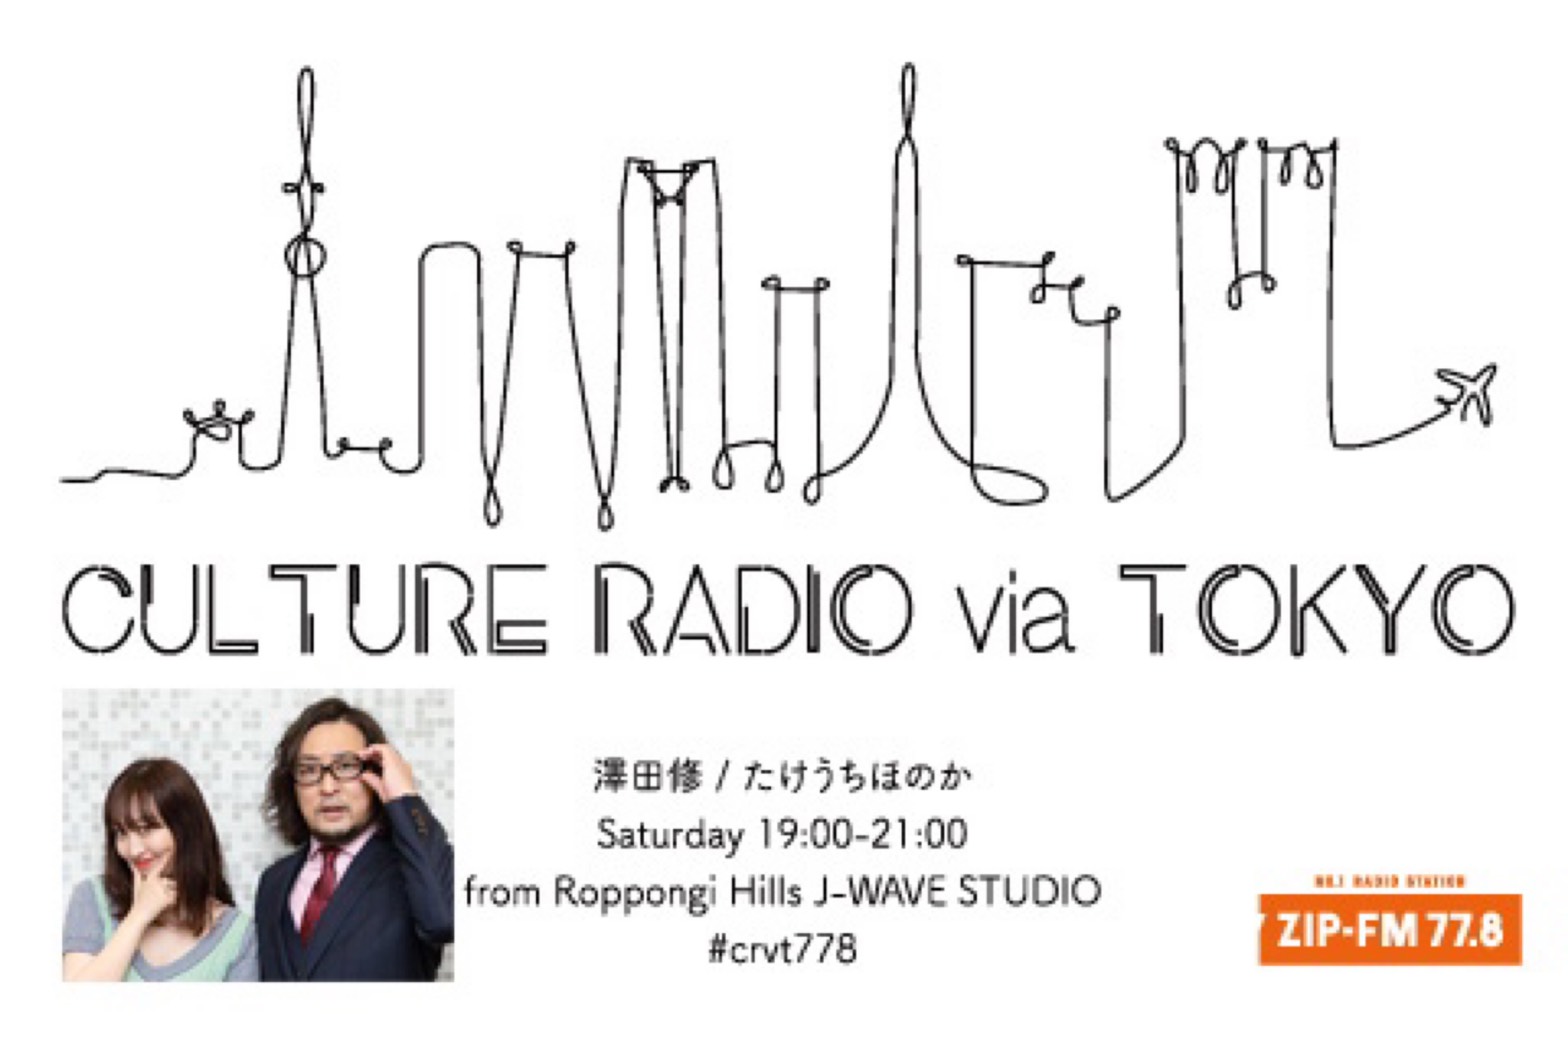 ZIP-FM「CULTURE RADIO via TOKYO」にReiがゲスト出演